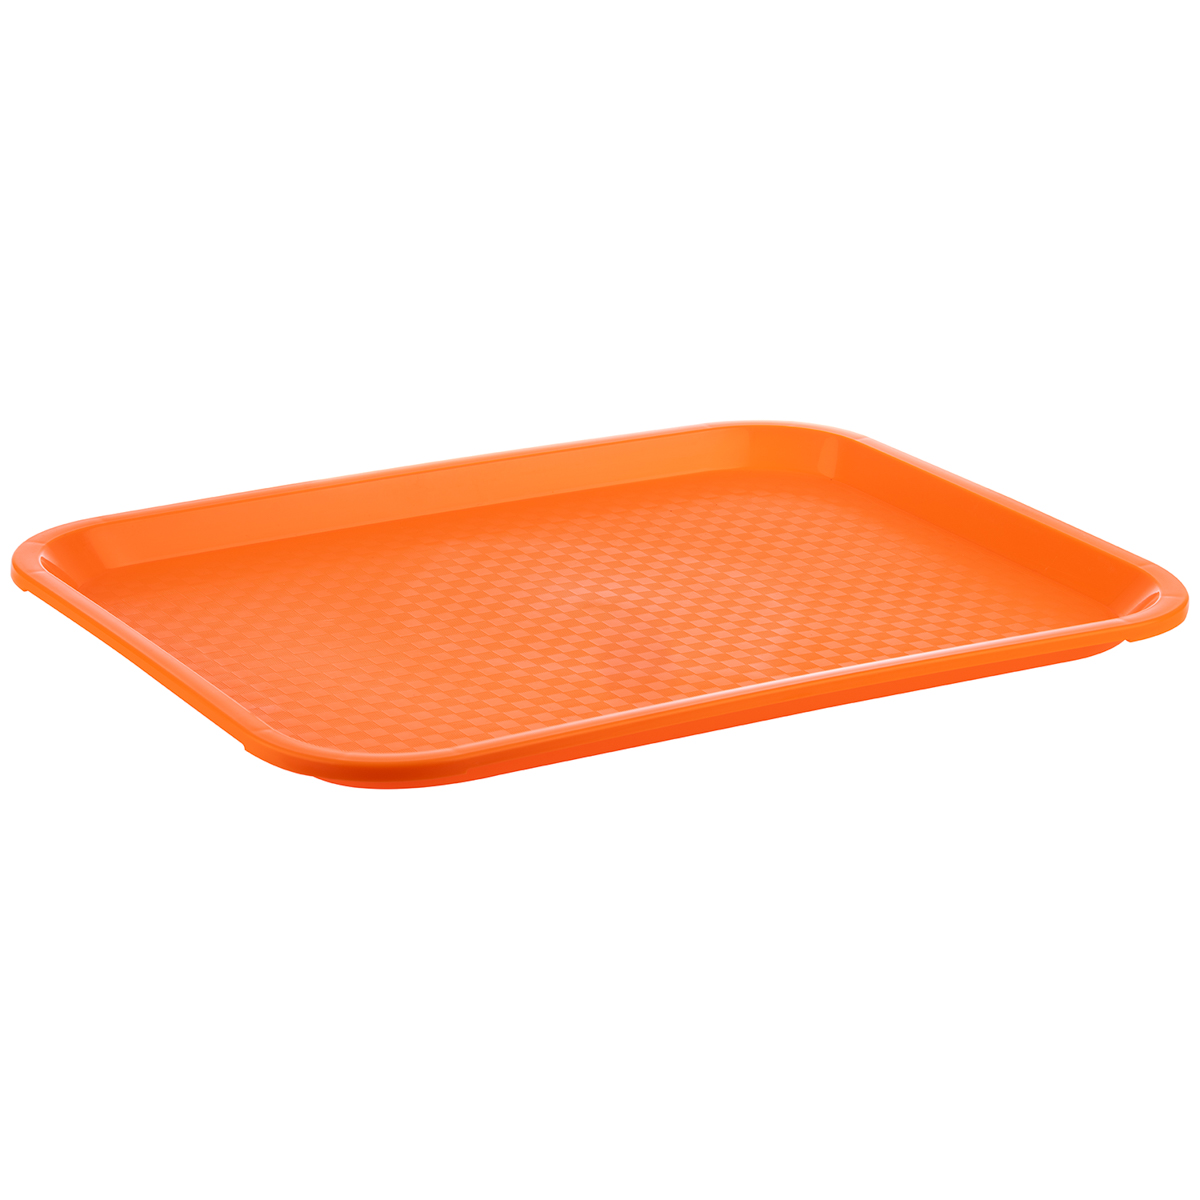 Tablett MODERN 35x27cm, Farbe: orange, Stapelnocken, bedingt rutschfest,